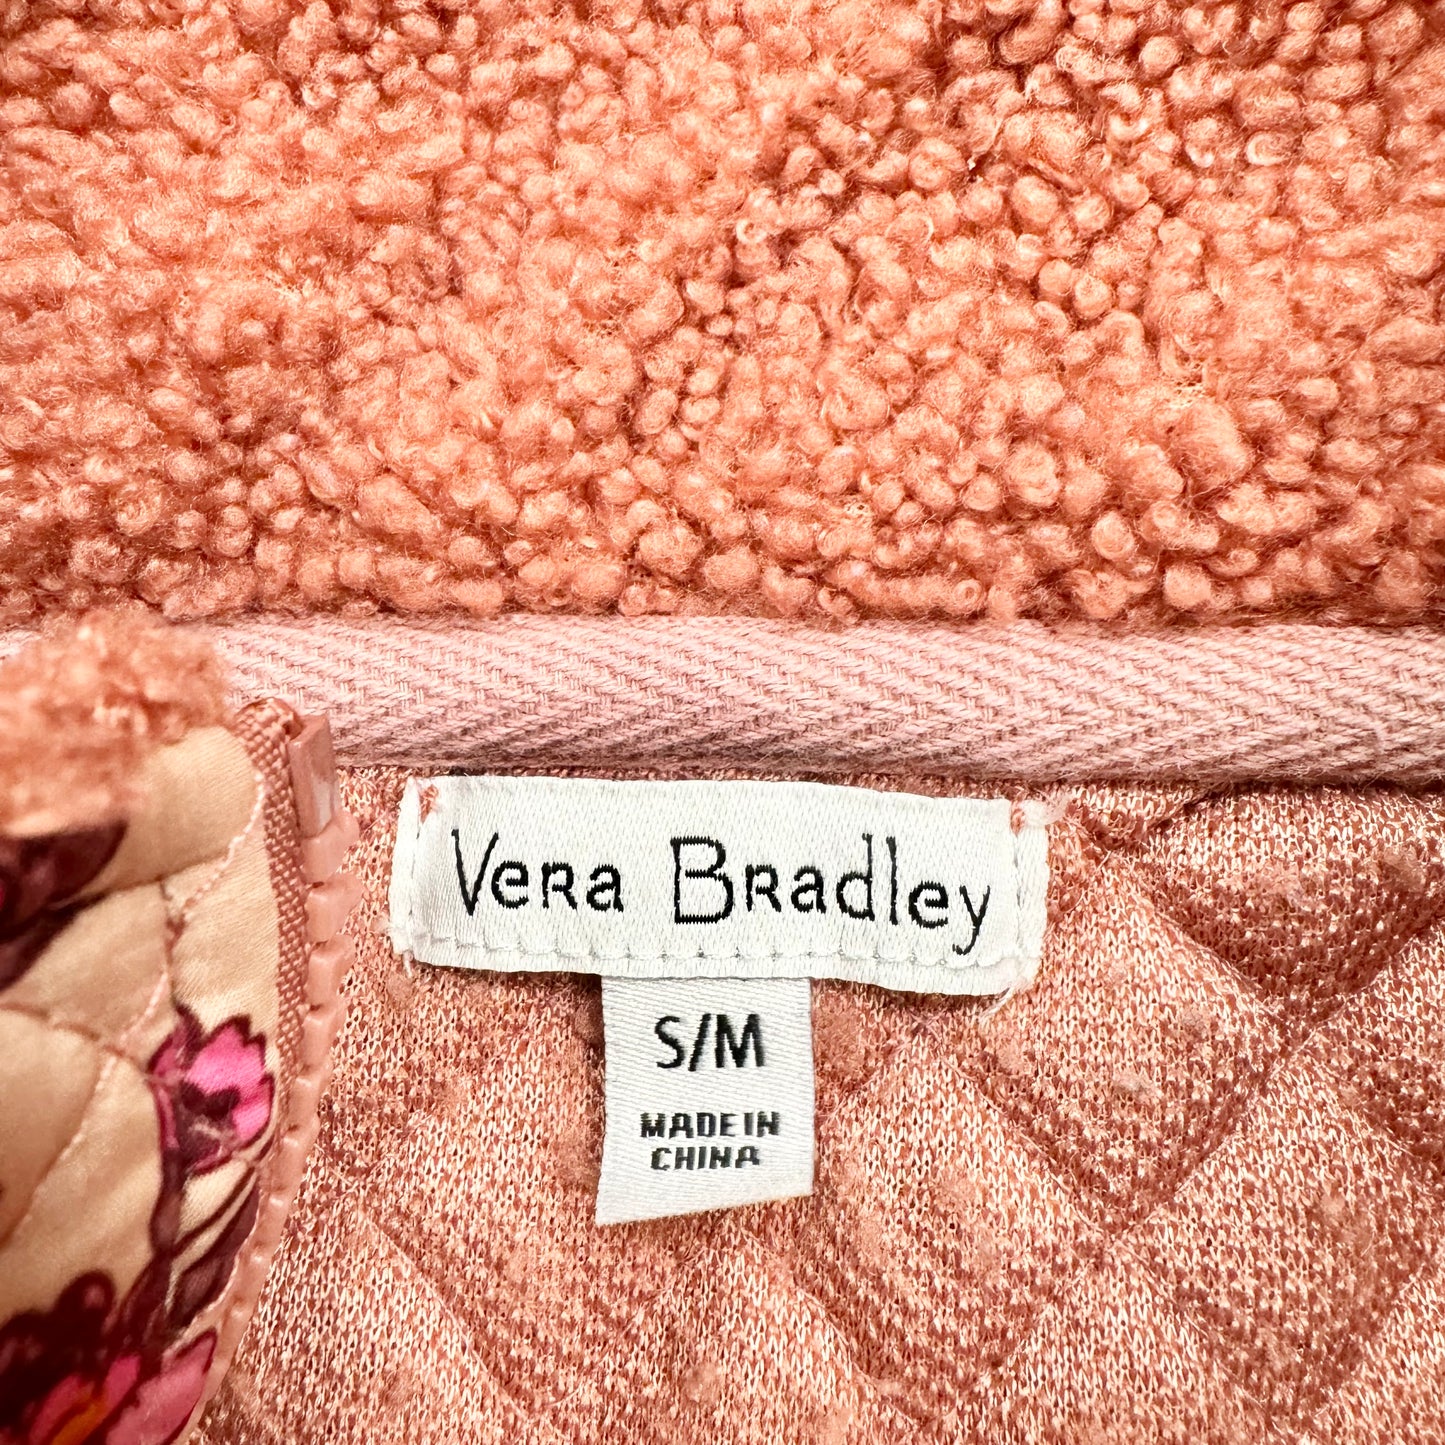 Top Long Sleeve By Vera Bradley Size: S/M